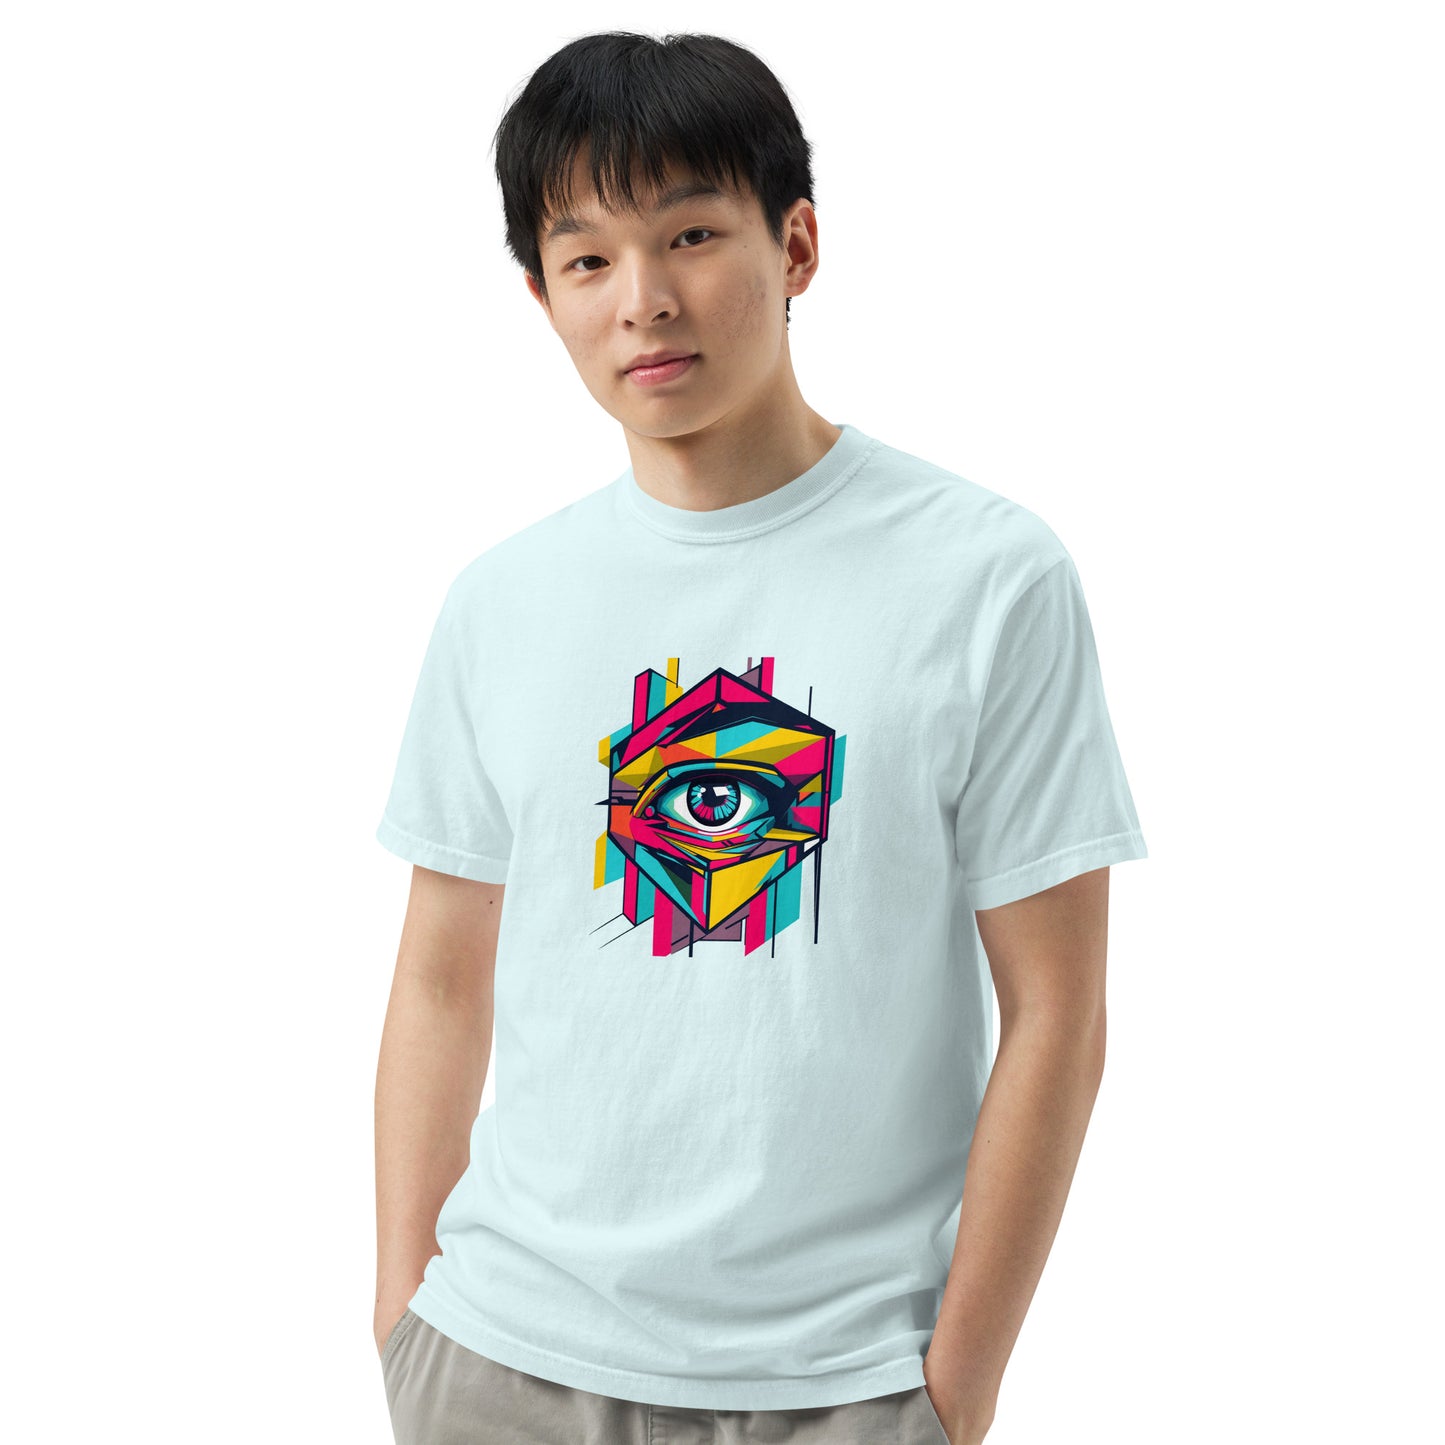 All Inclusive Eye T-shirt